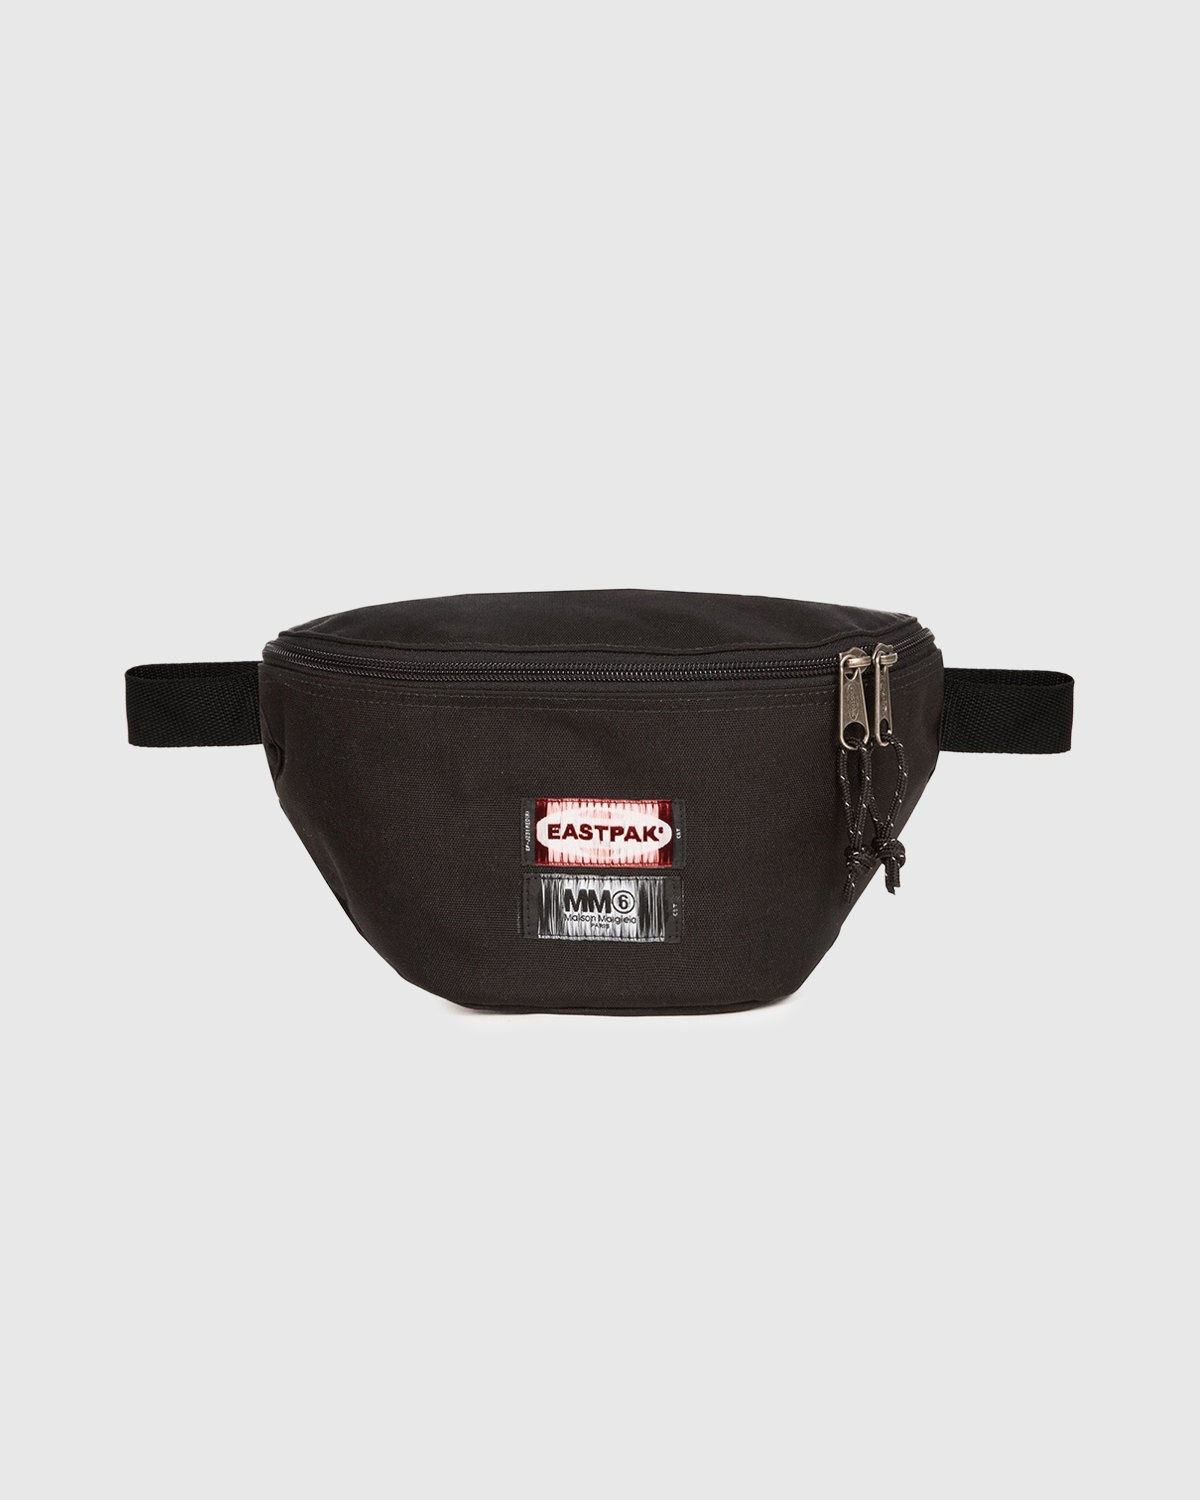 MM6 Maison Margiela x Eastpak – Belt Bag Black